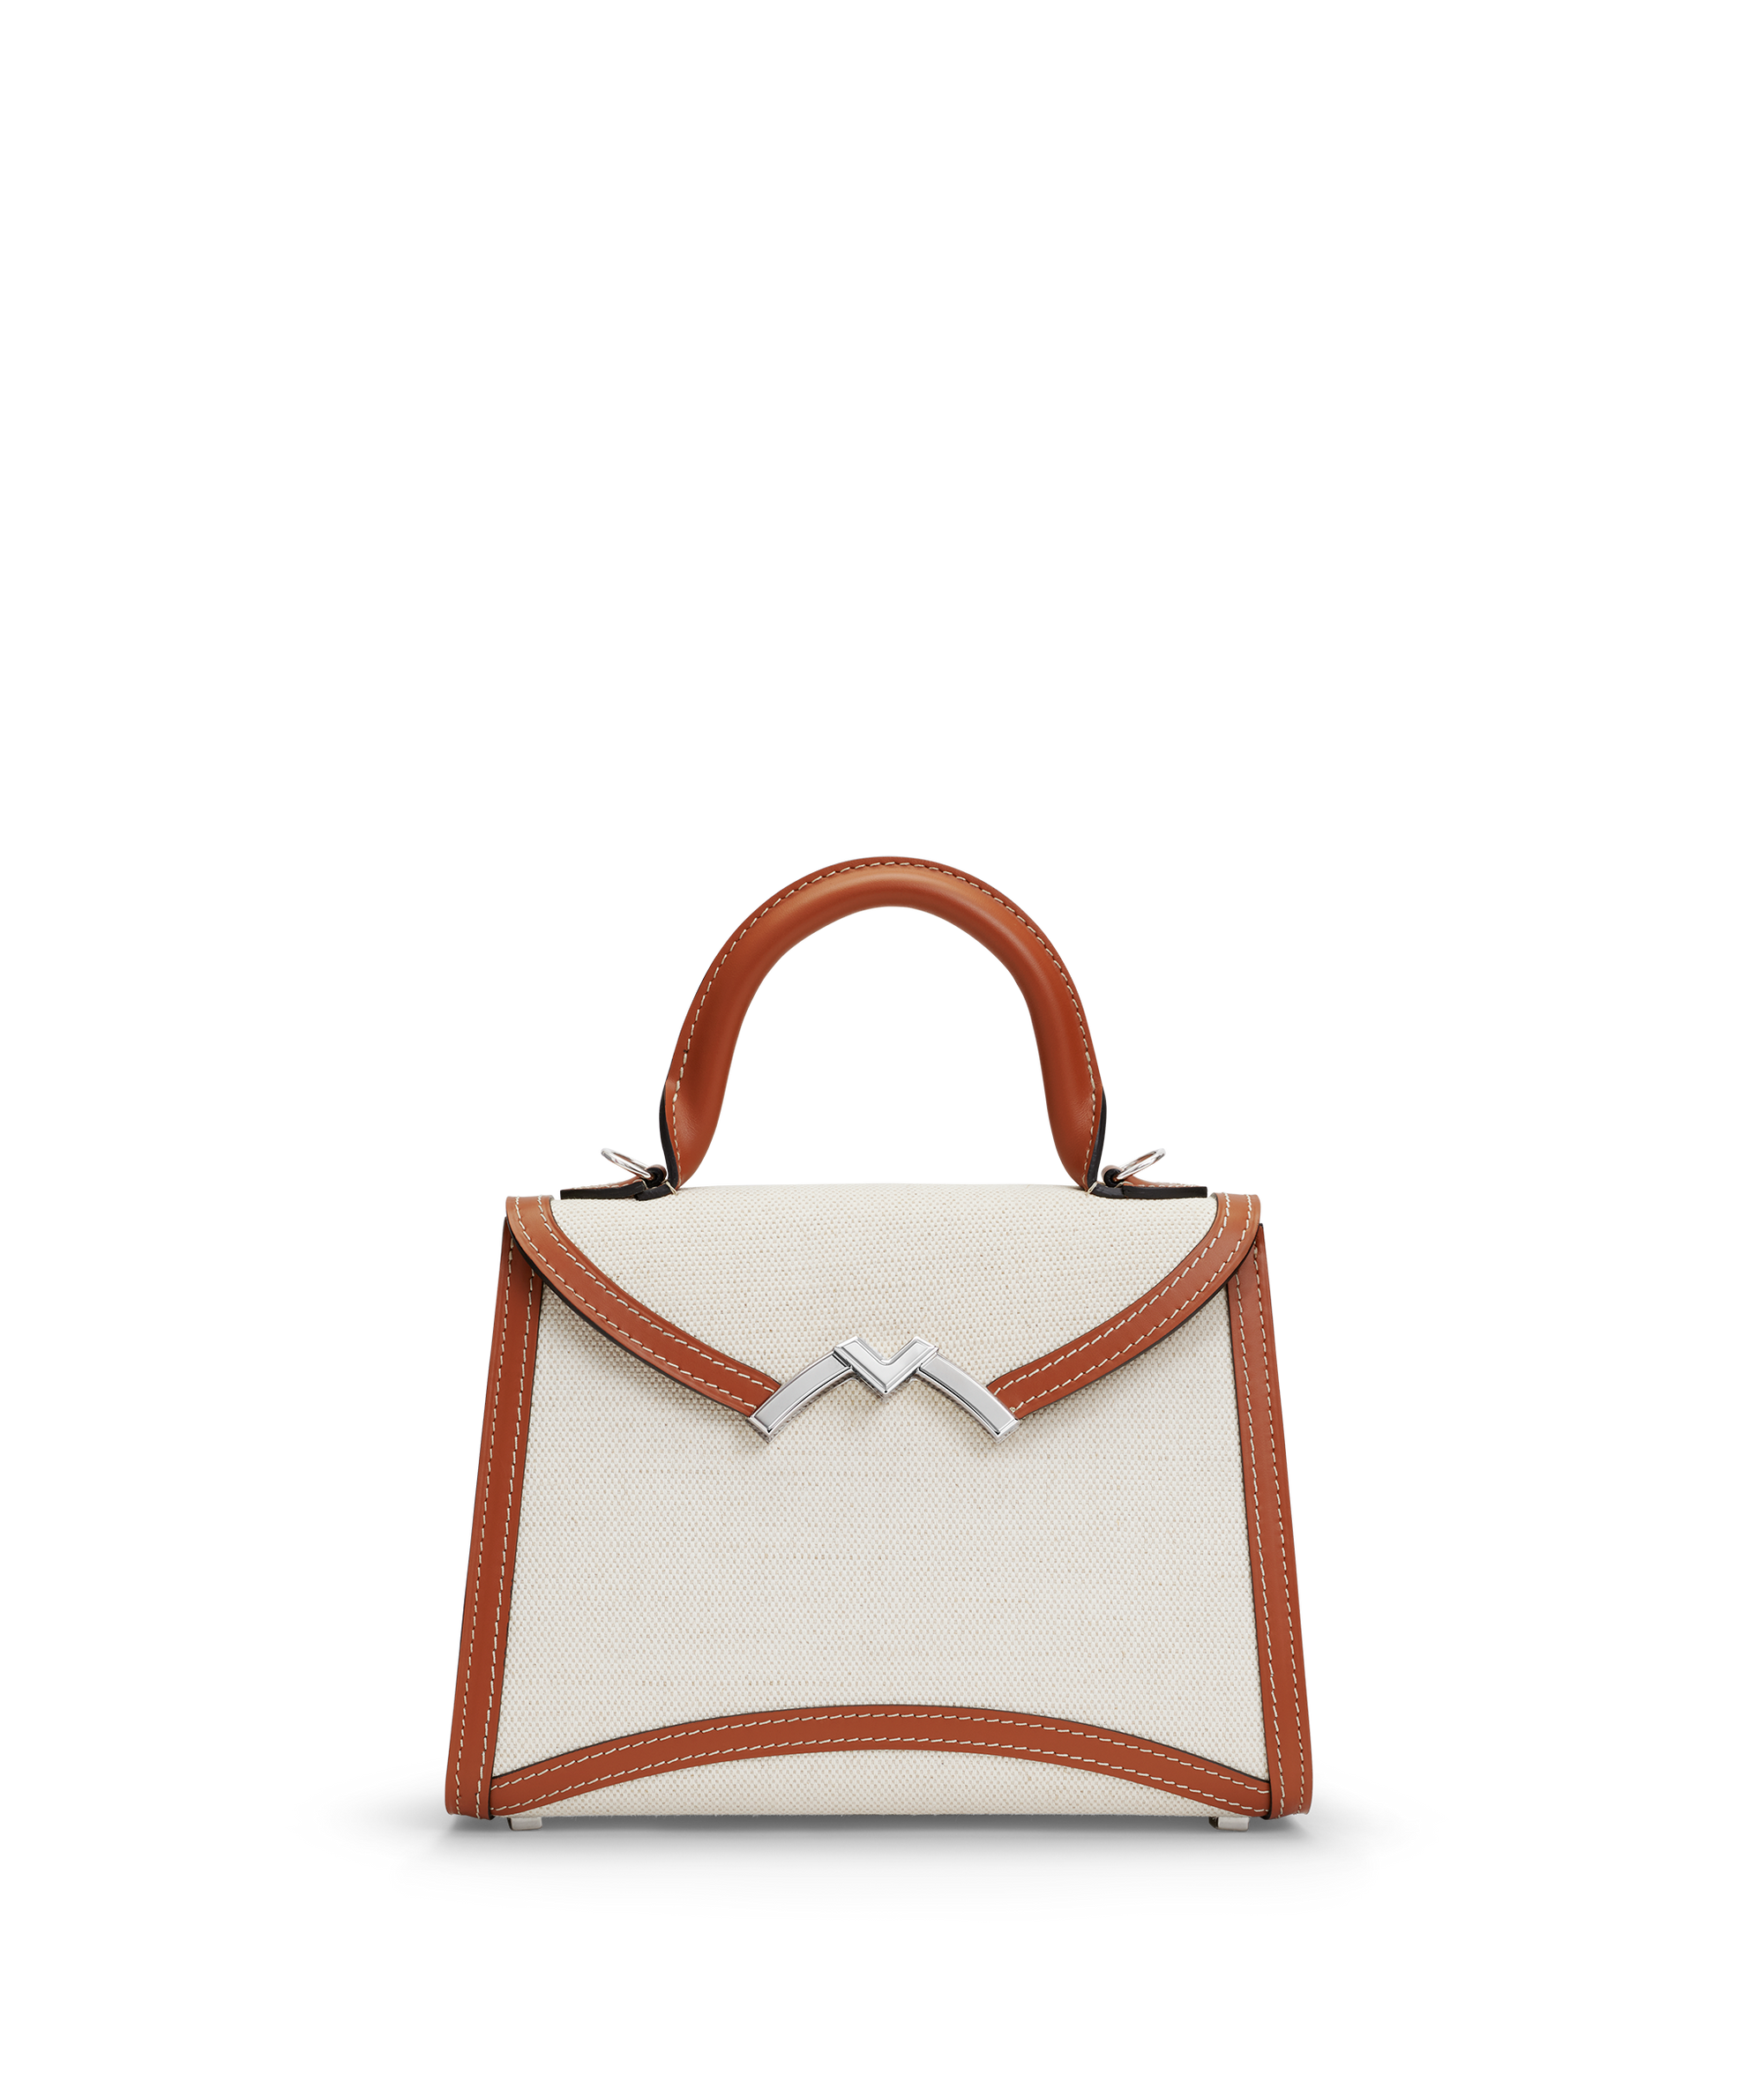 Moynat Gabrielle PM w/ Tags - Brown Handle Bags, Handbags